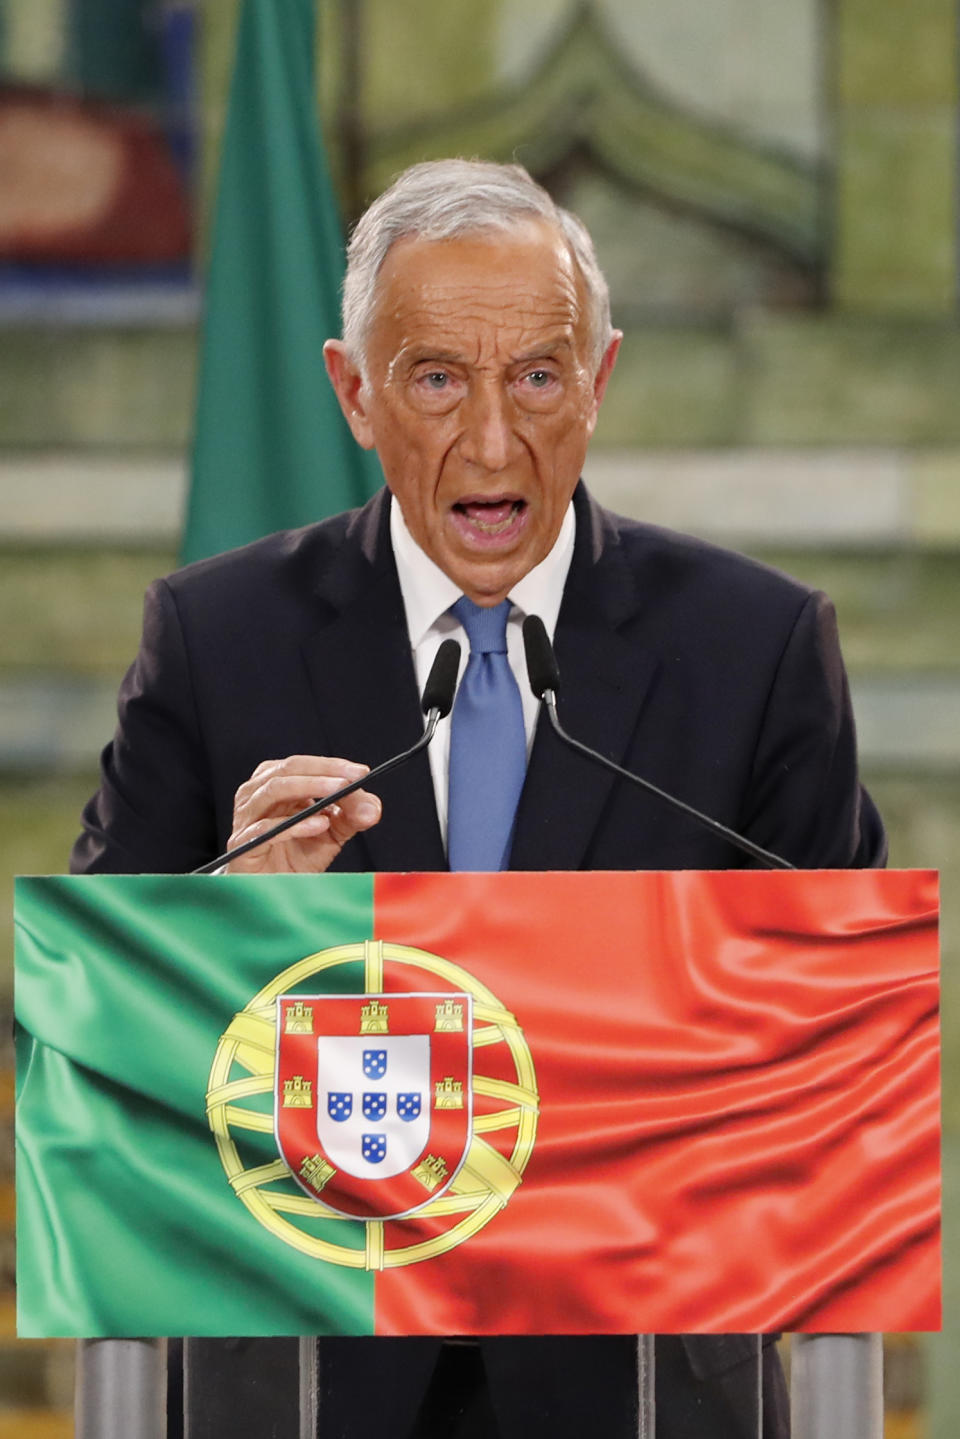 Incumbent Marcelo Rebelo de Sousa delivers a speech following the results of Portugal's presidential election, in Lisbon, Monday, Jan. 25, 2021. Rebelo de Sousa was reelected for a second five-year term. (AP Photo/Armando Franca)